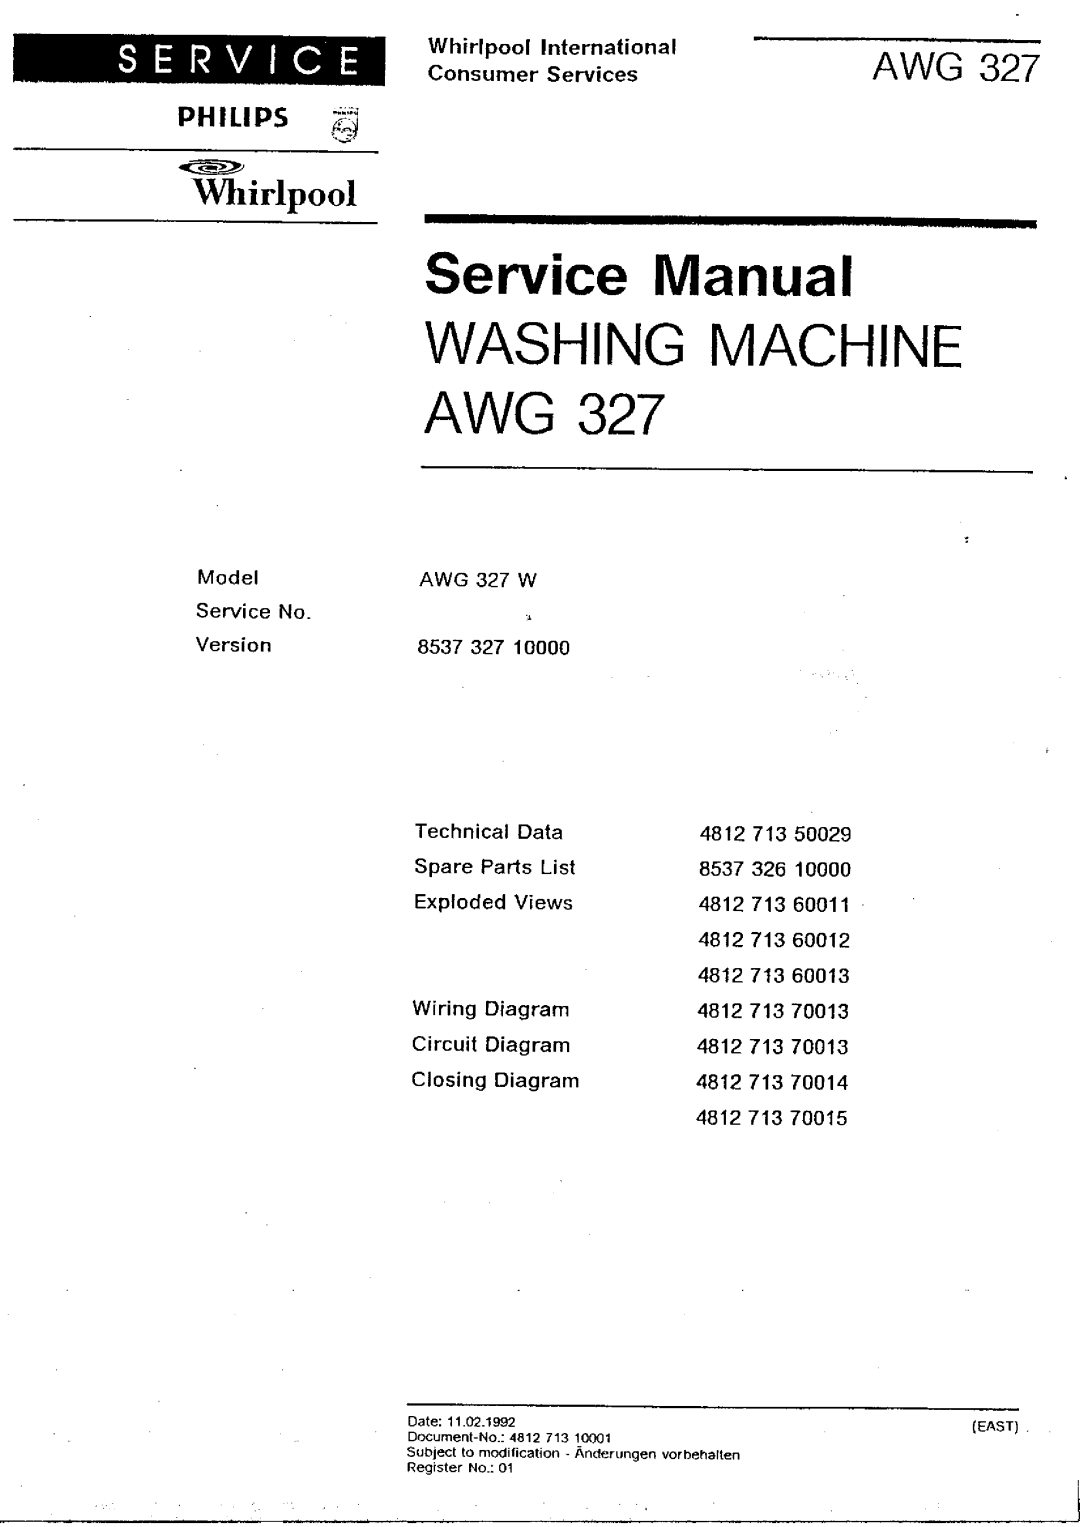 Whirlpool AWG 327 W service manual Whirlpool Service~-~Manual, Was Hing, Machine, PH I LI PS ~~l, A Wg 